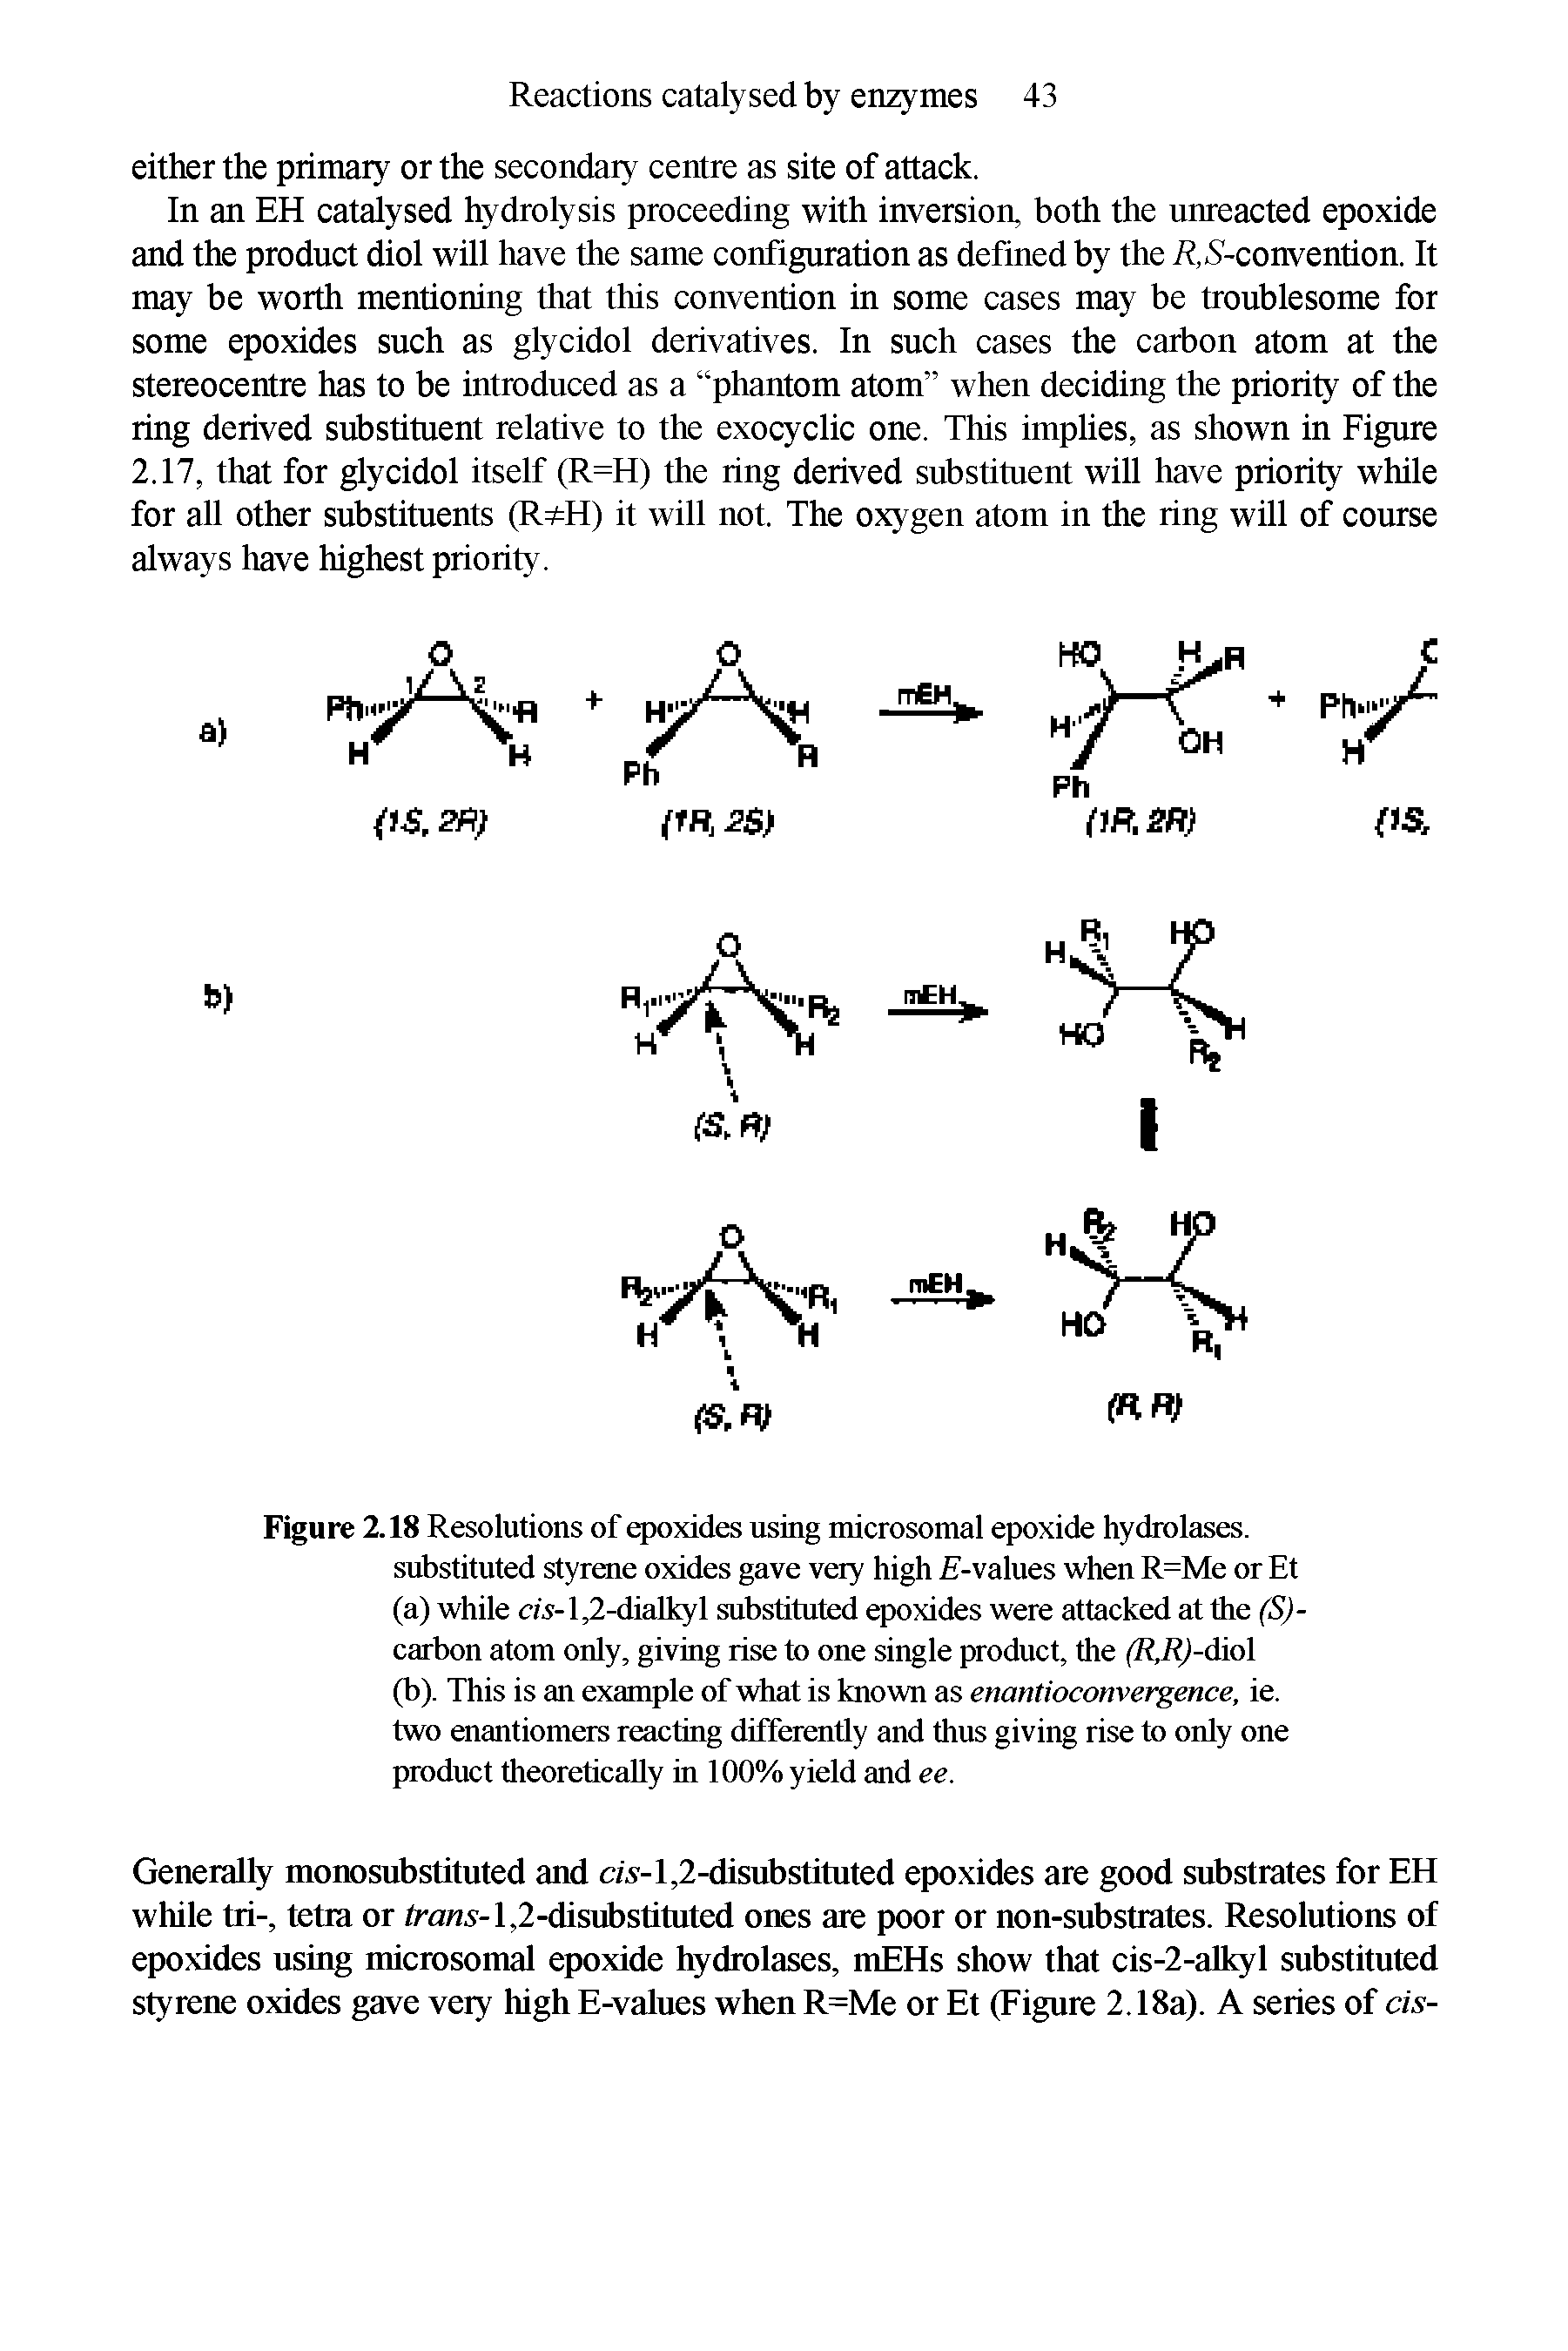 Figure 2.18 Resolutions of epoxides using microsomal epoxide hydrolases.